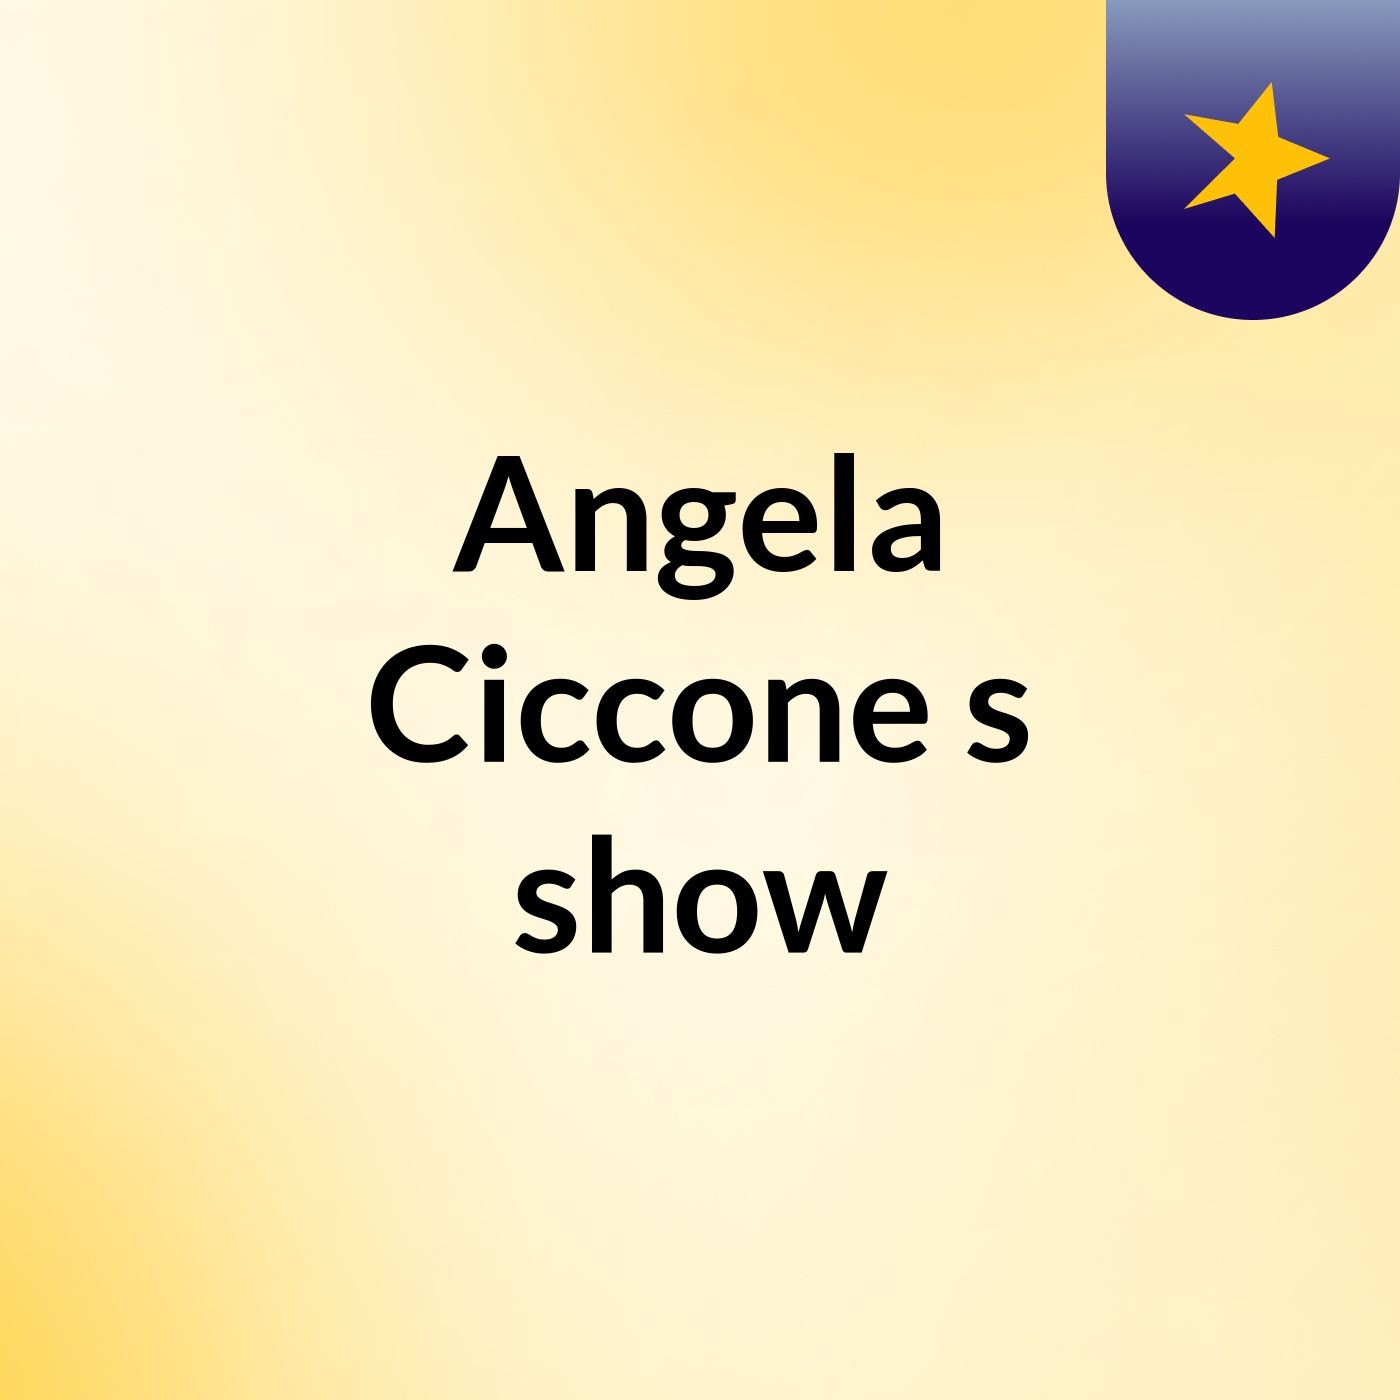 Angela Ciccone's show